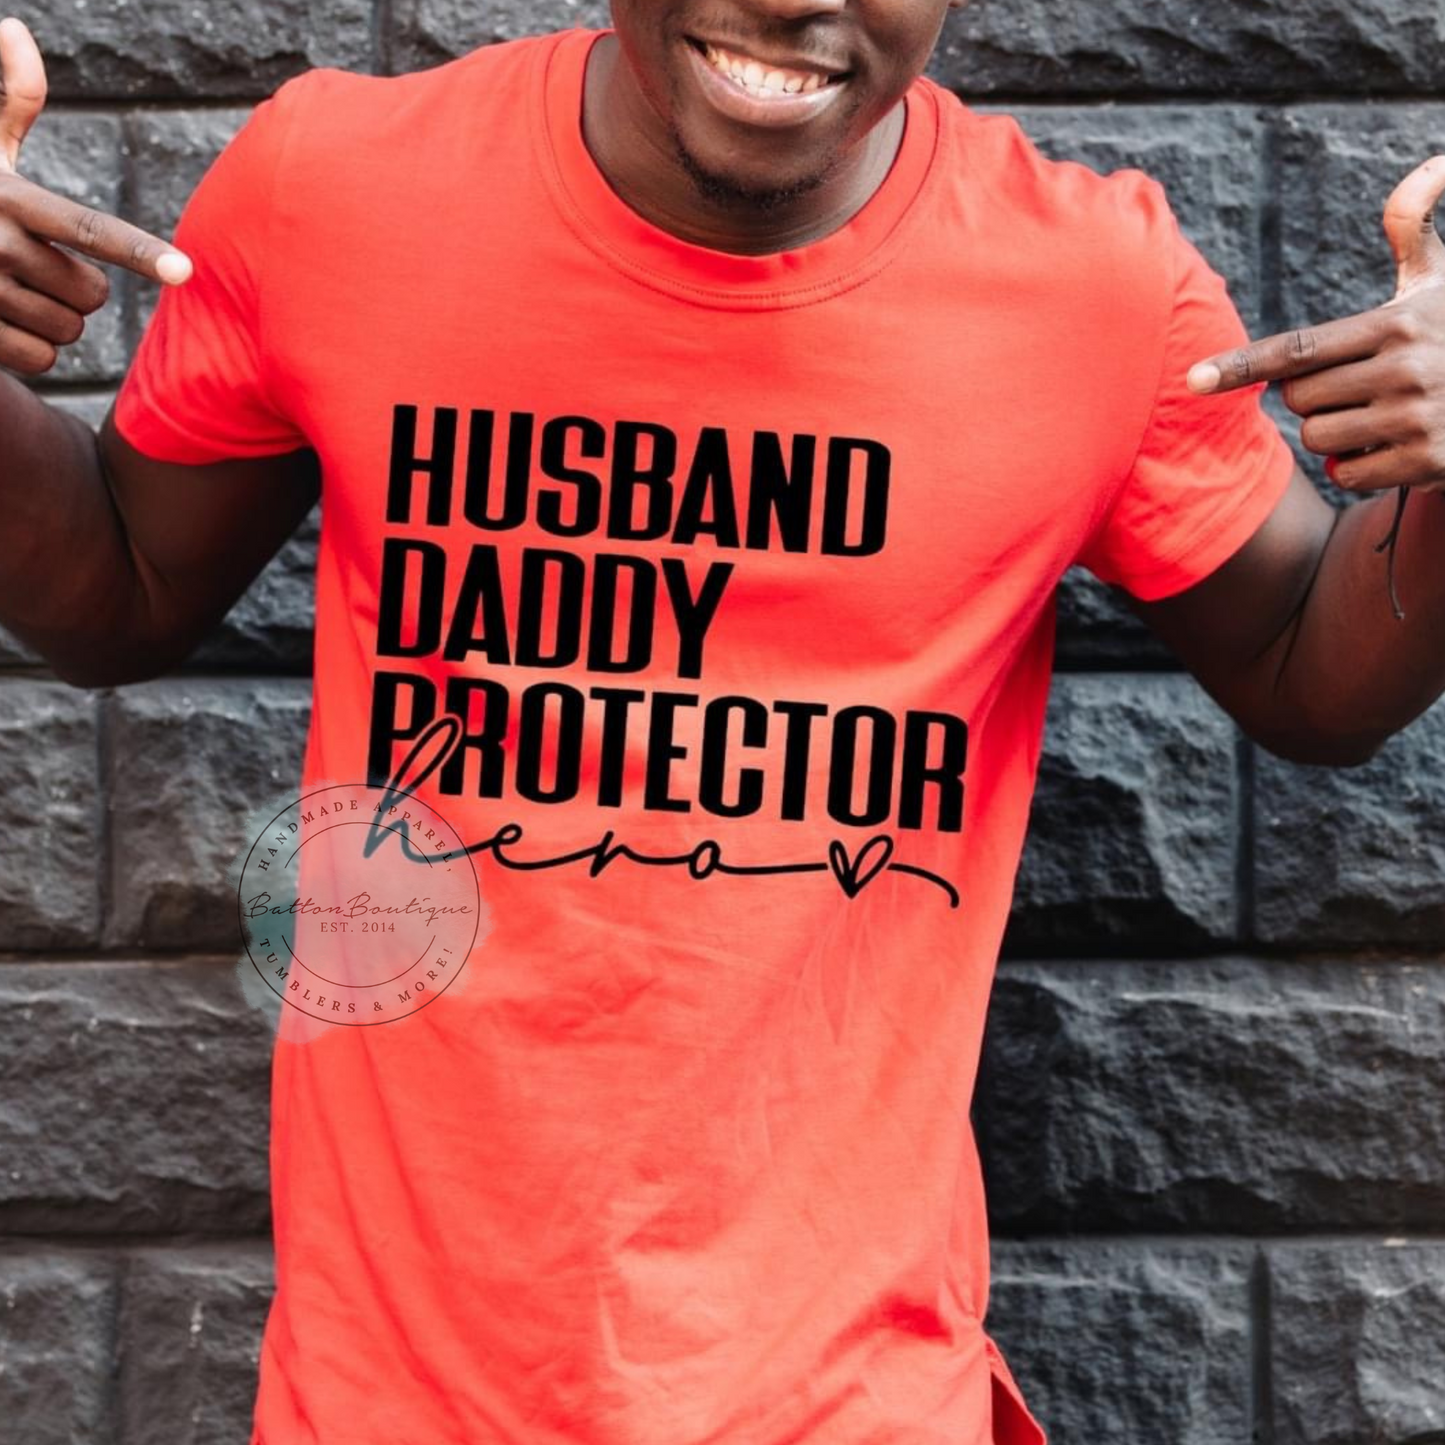 Husband Daddy Protector Hero